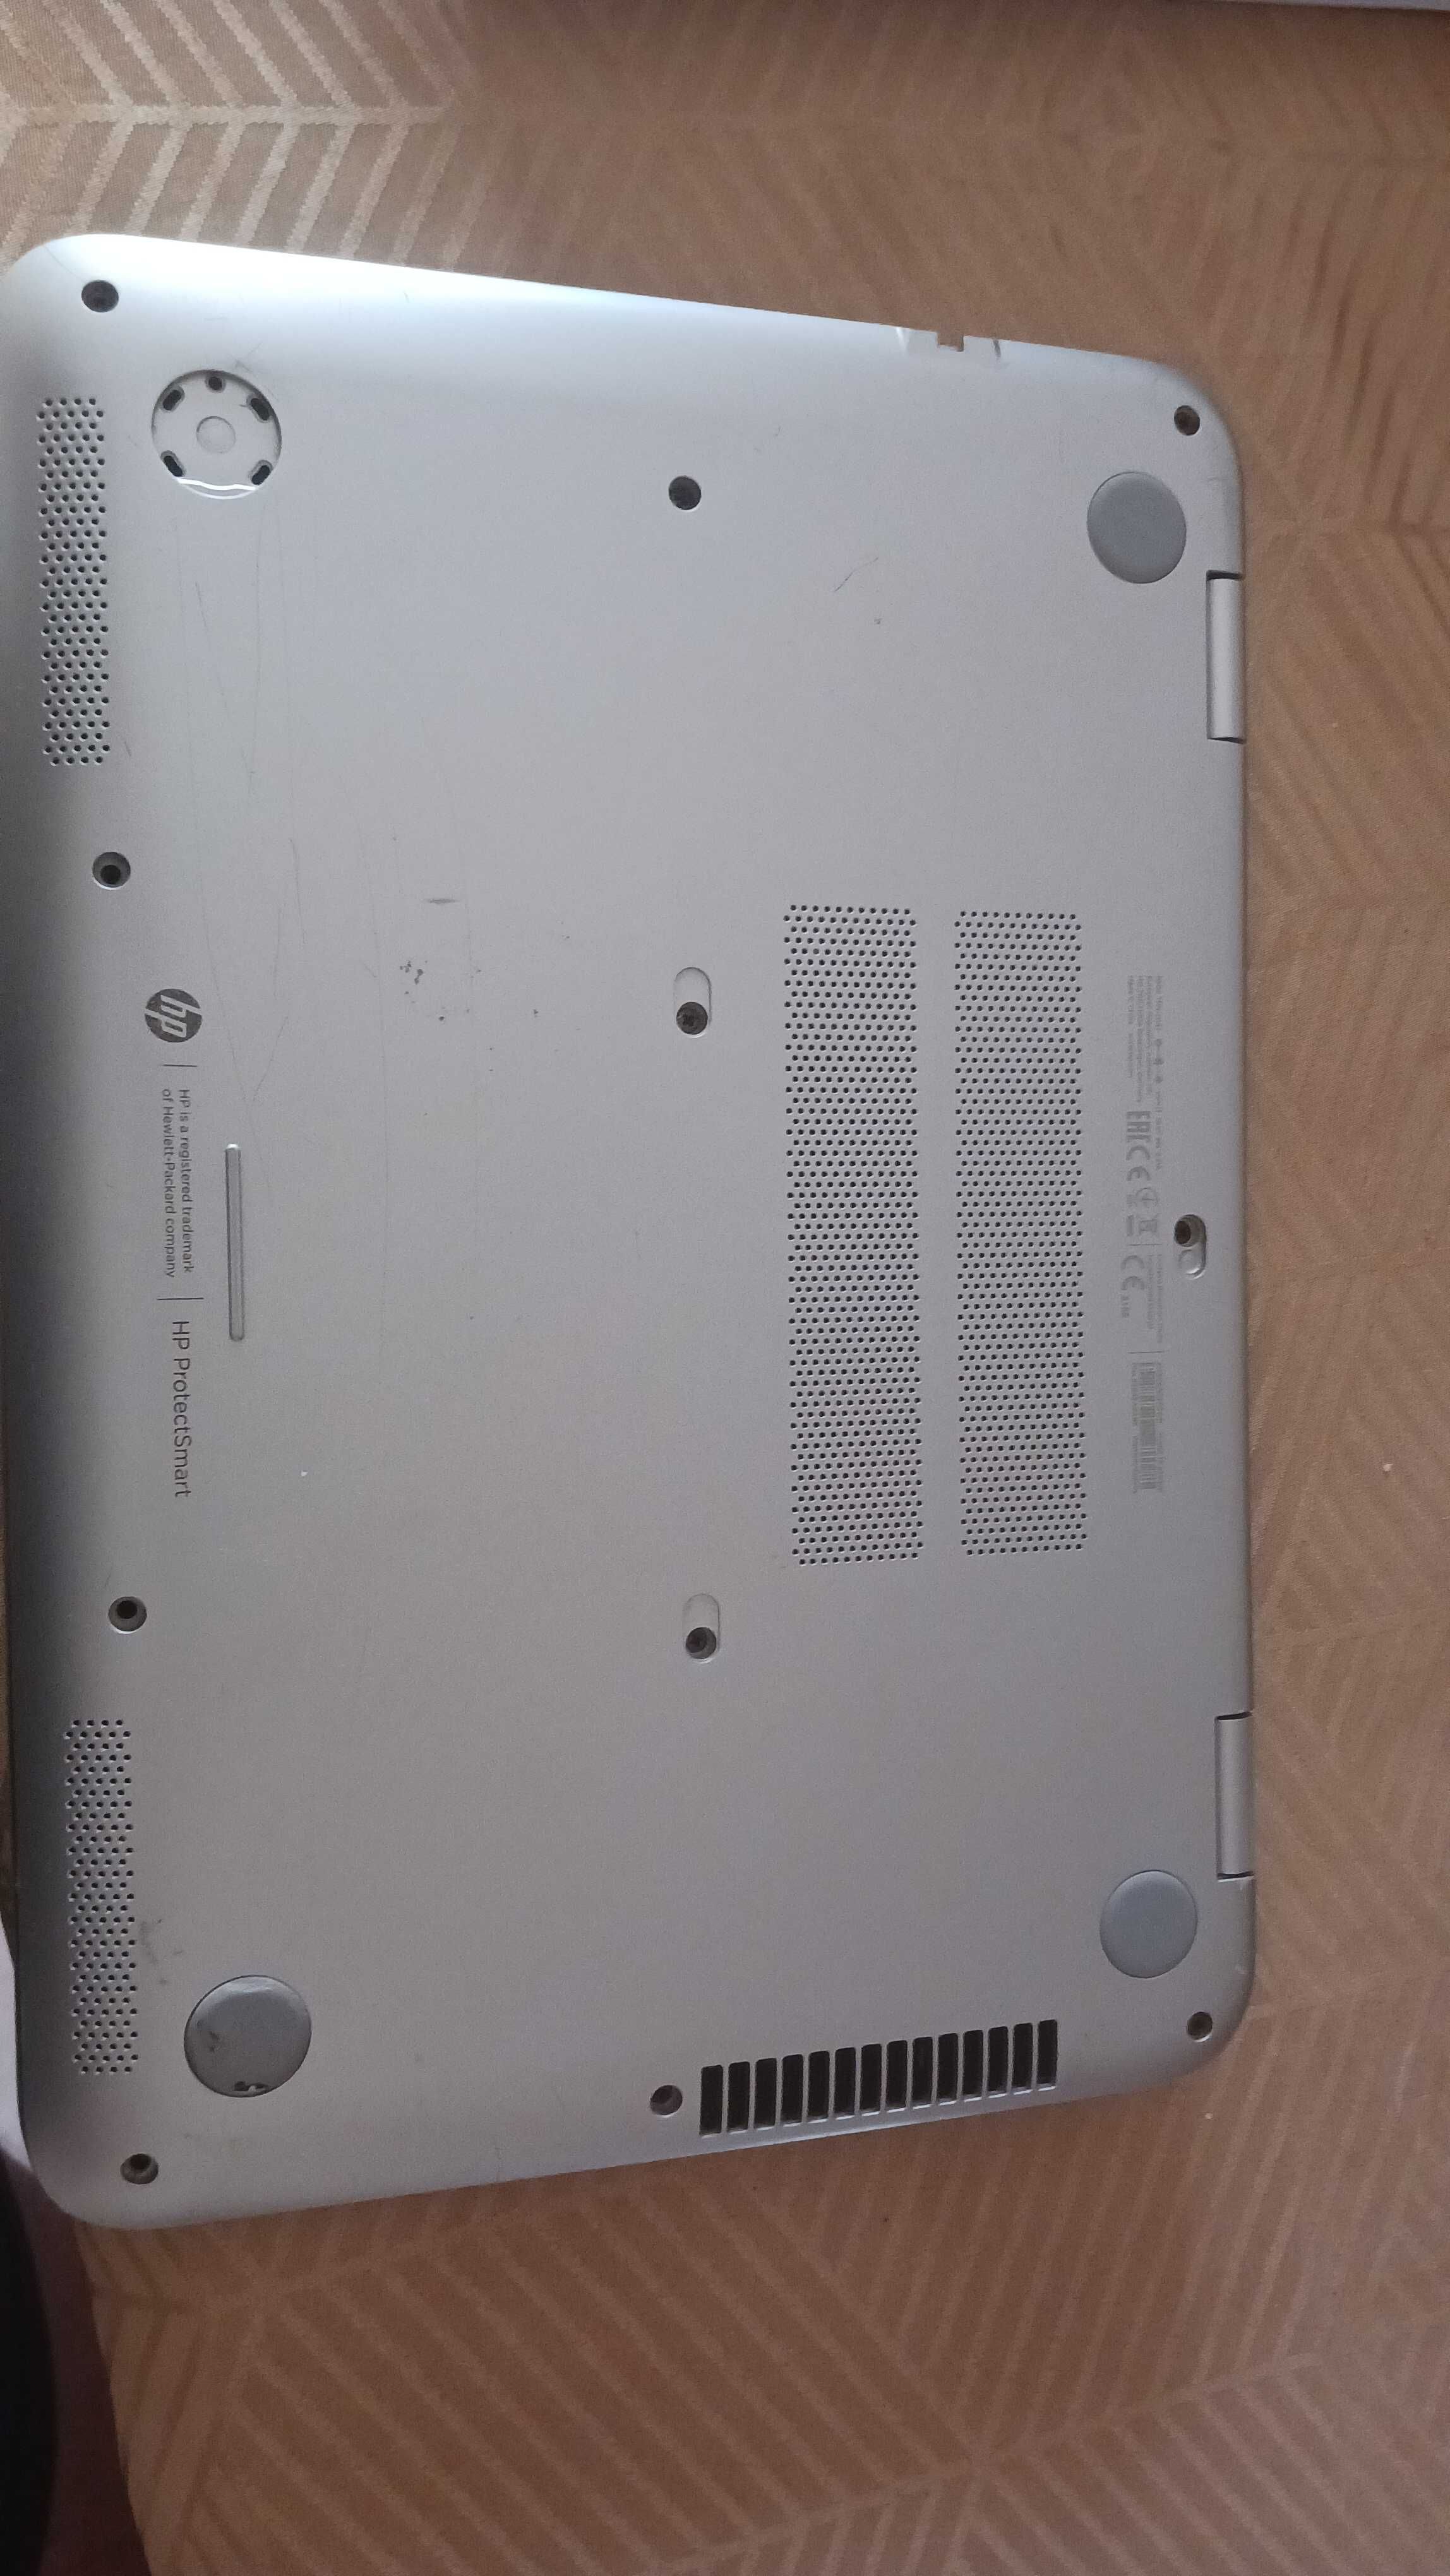 PC Notebook HP Pavilion TouchSmart - Para reparar